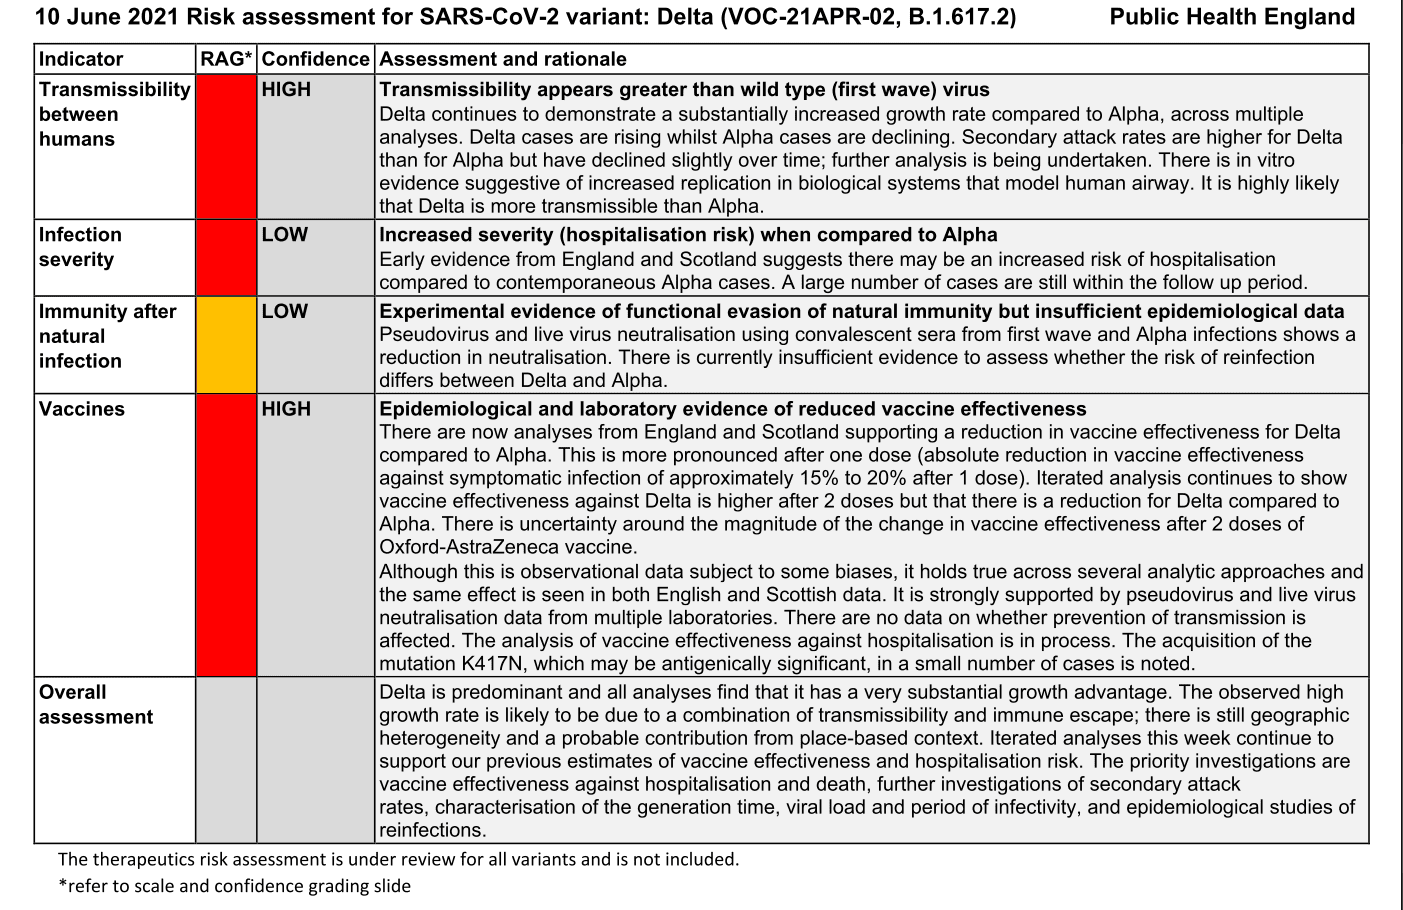 10 June 2021 Risk assessment for SARS-CoV-2 variant Delta – VOC-21APR-02 B16172